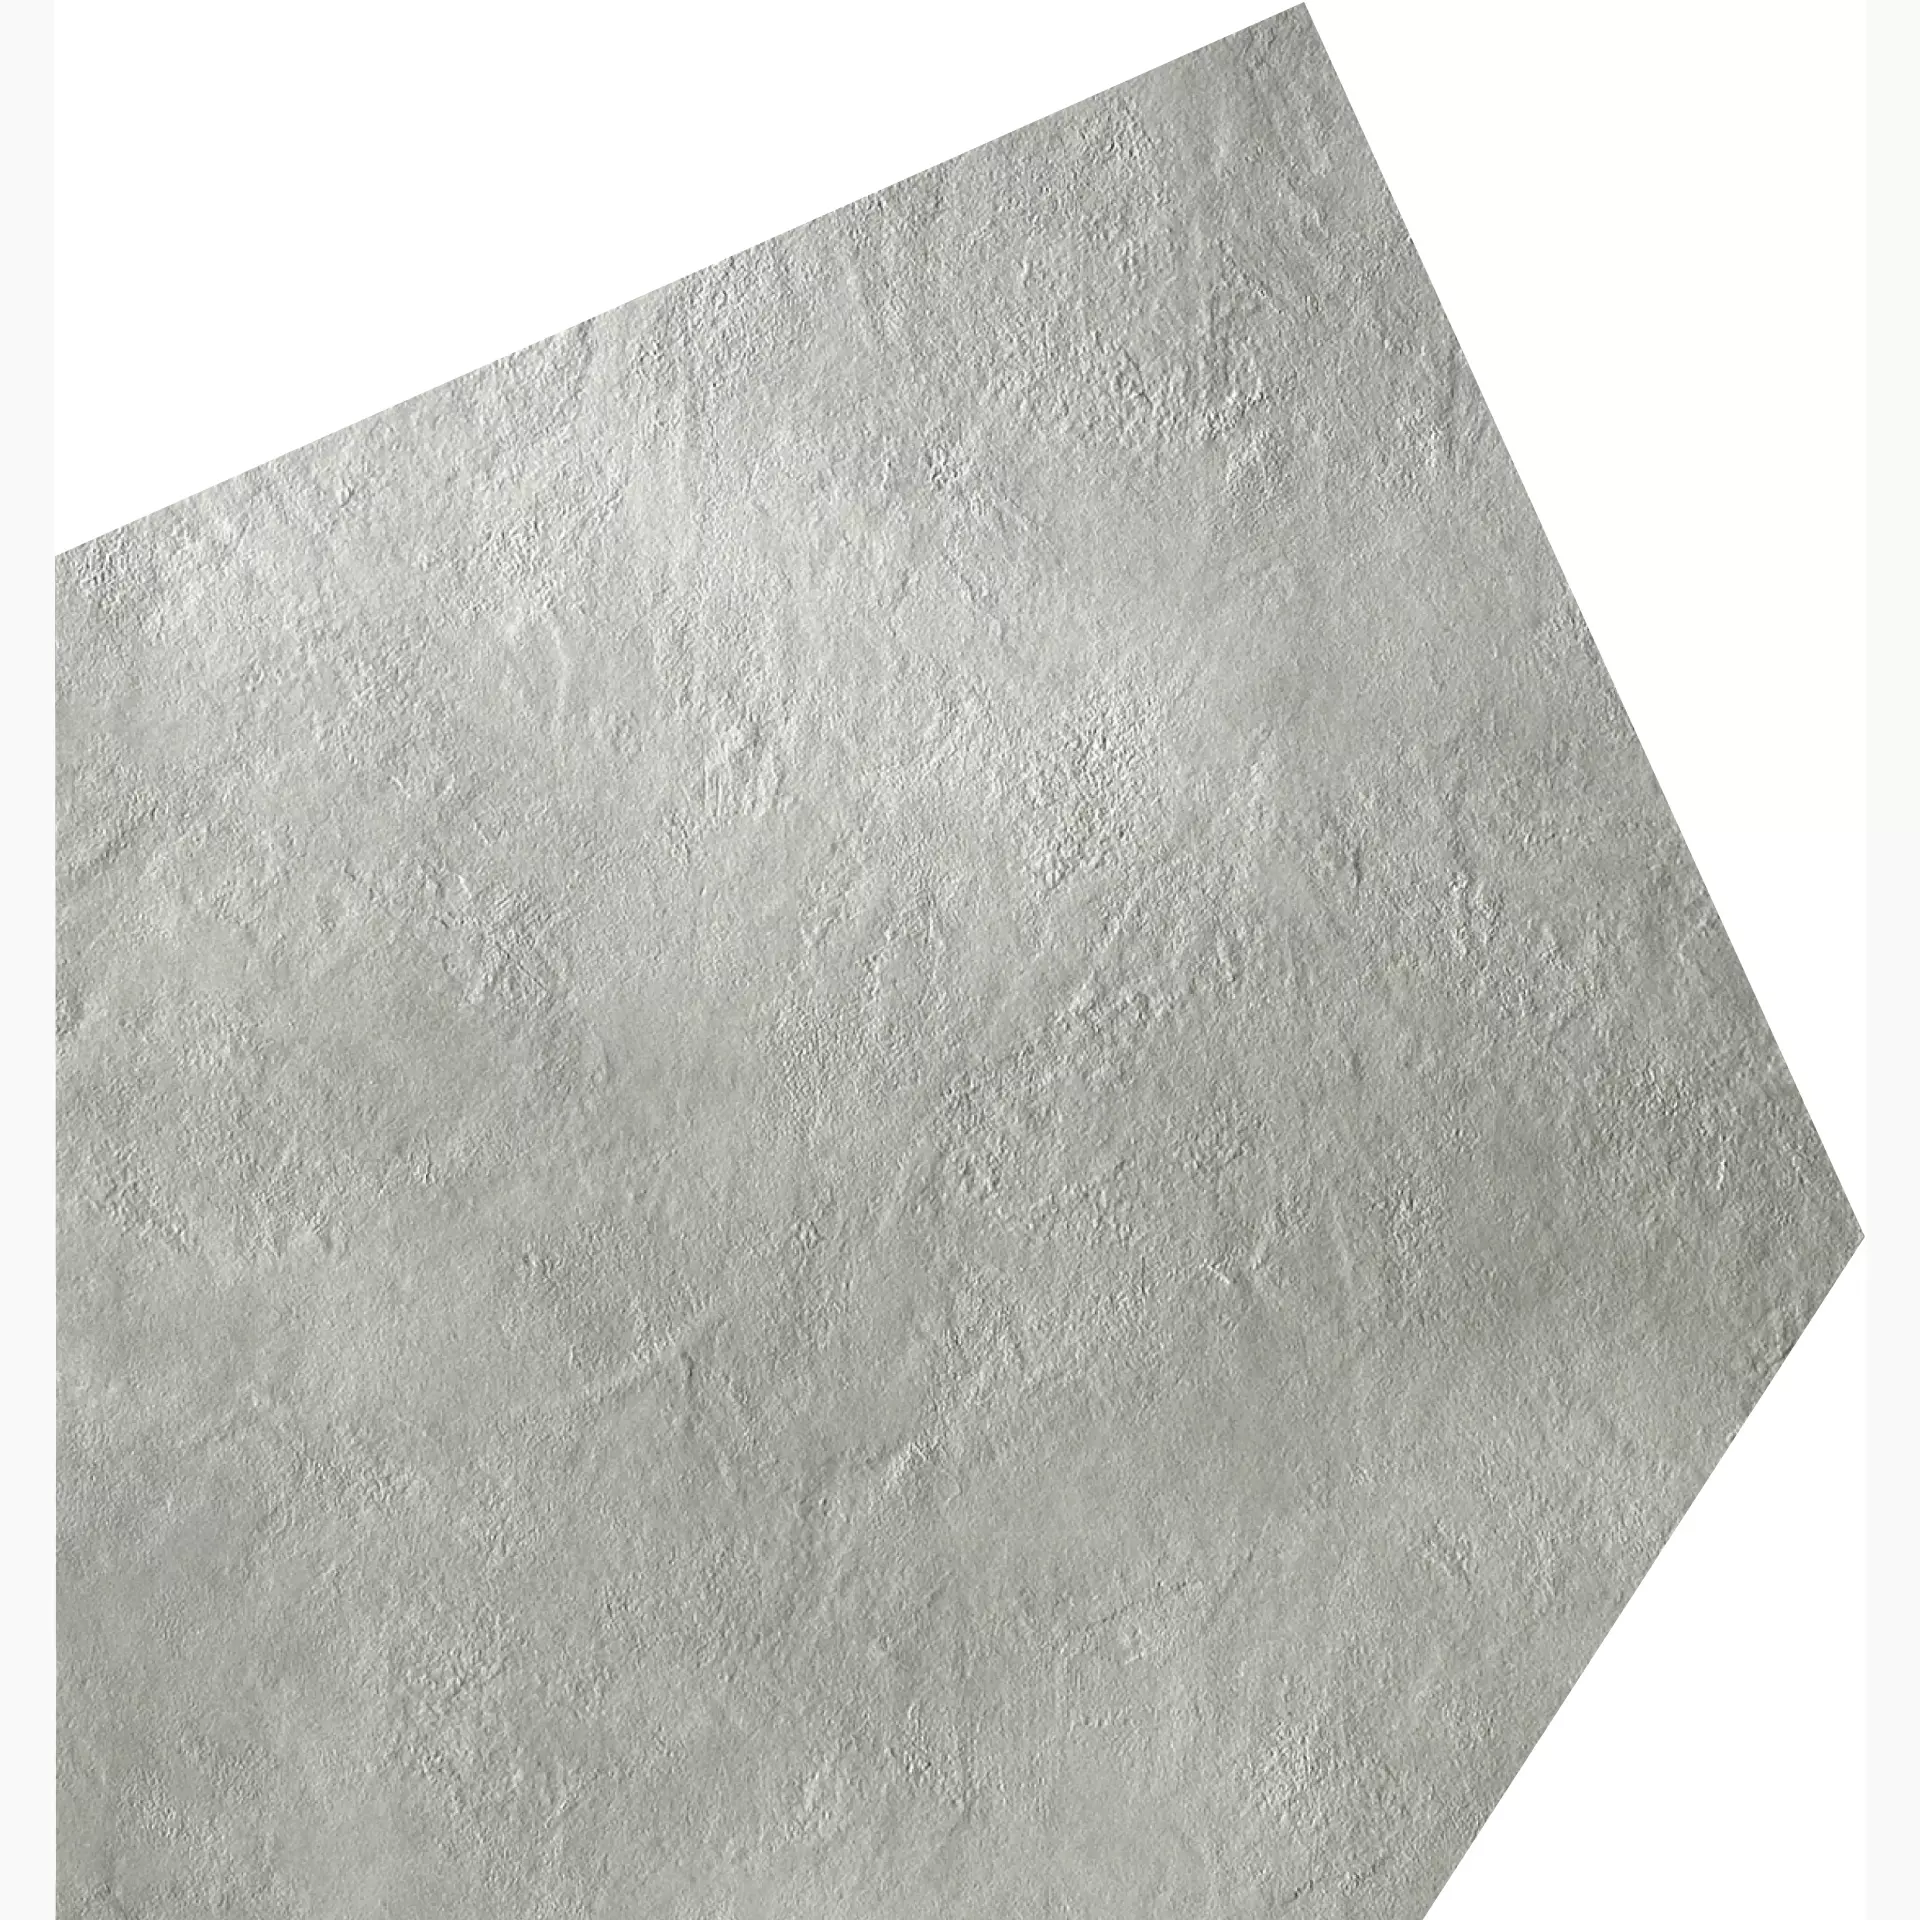 Gigacer Argilla Dry Material Decor Large Pentagon 6ARGPENTLDRY 119x119cm 6mm